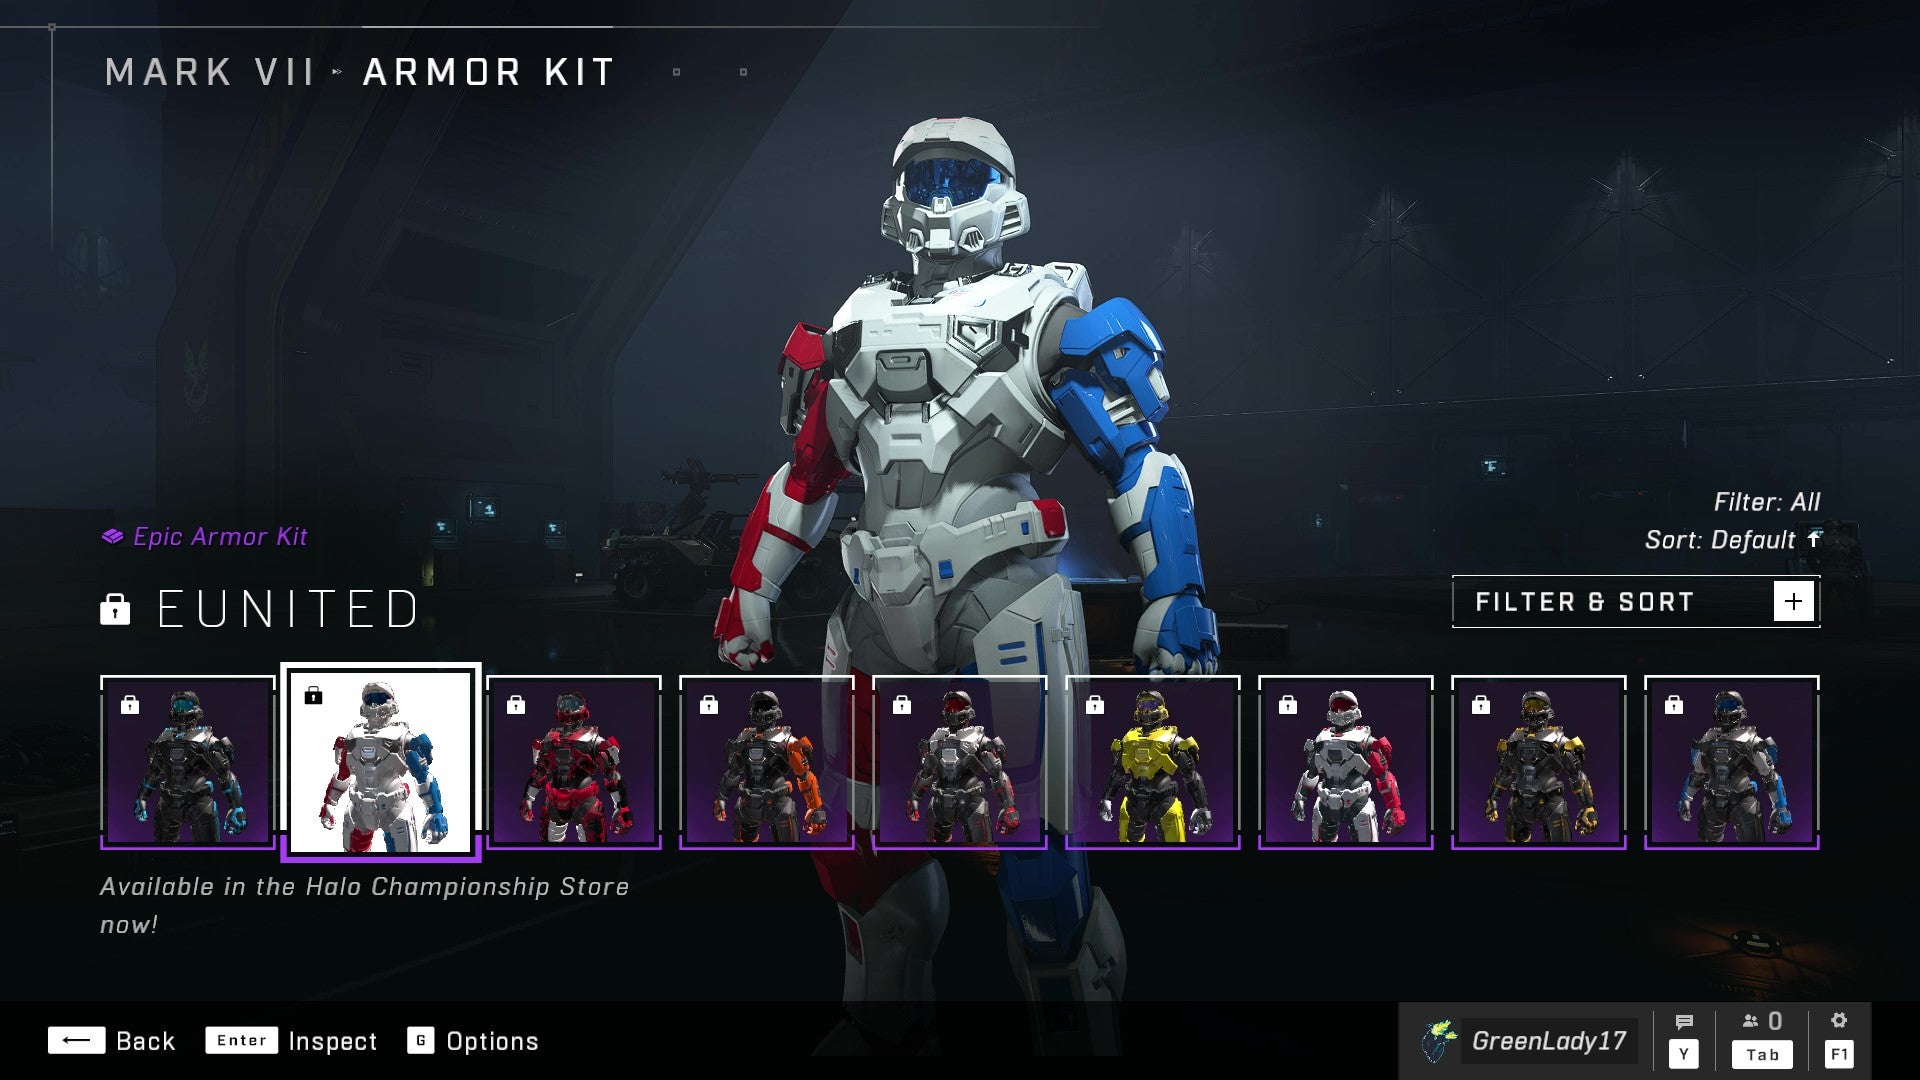 Halo Infinite's Mark VII Armor Core, sporting the EUnited Armor Kit customisation.